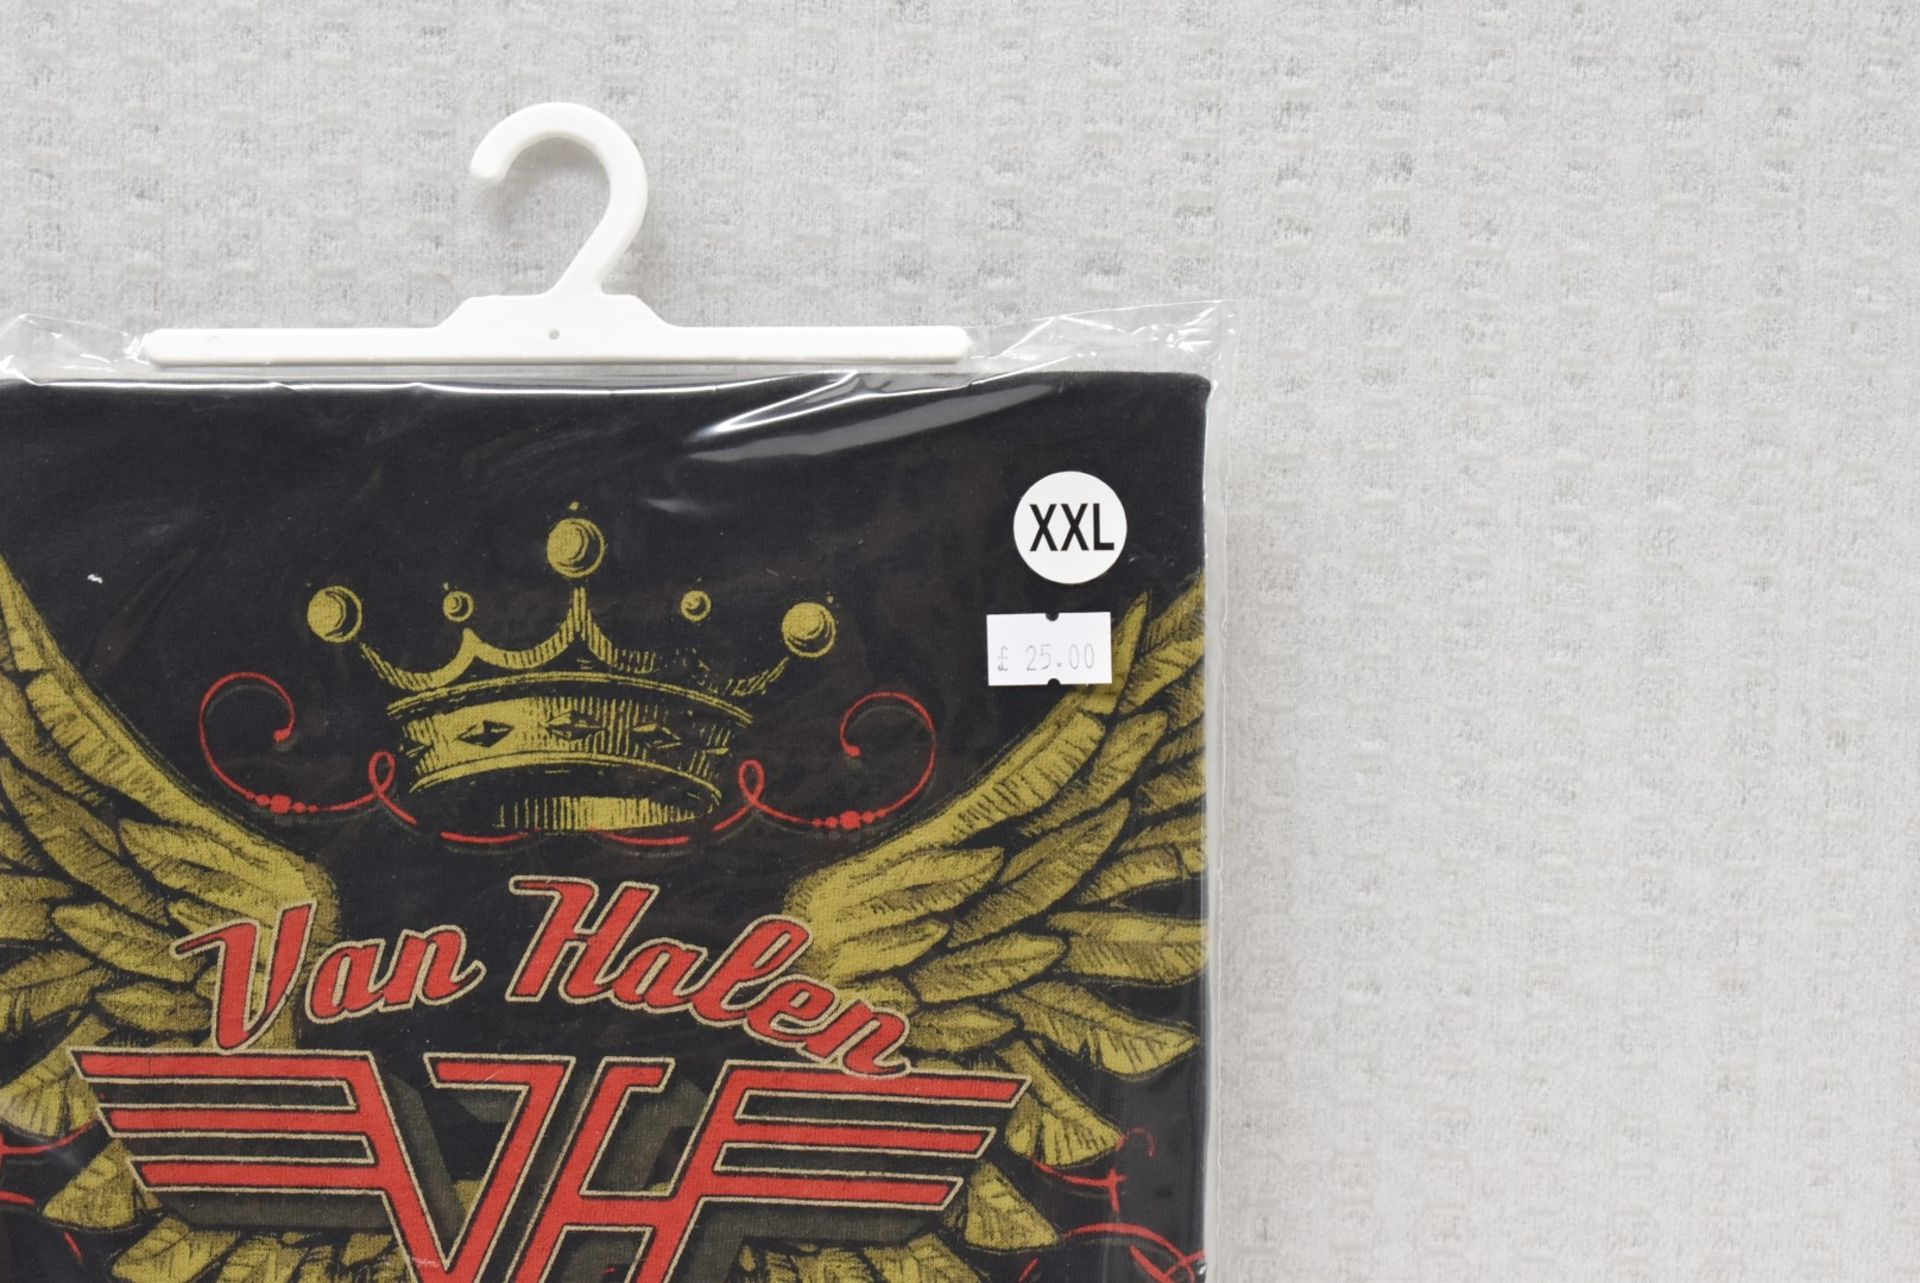 1 x VAN HALEN Wings Logo Short Sleeve Men's T-Shirt by M& O Gold - Size: XXL - Colour: Black - - Image 3 of 6